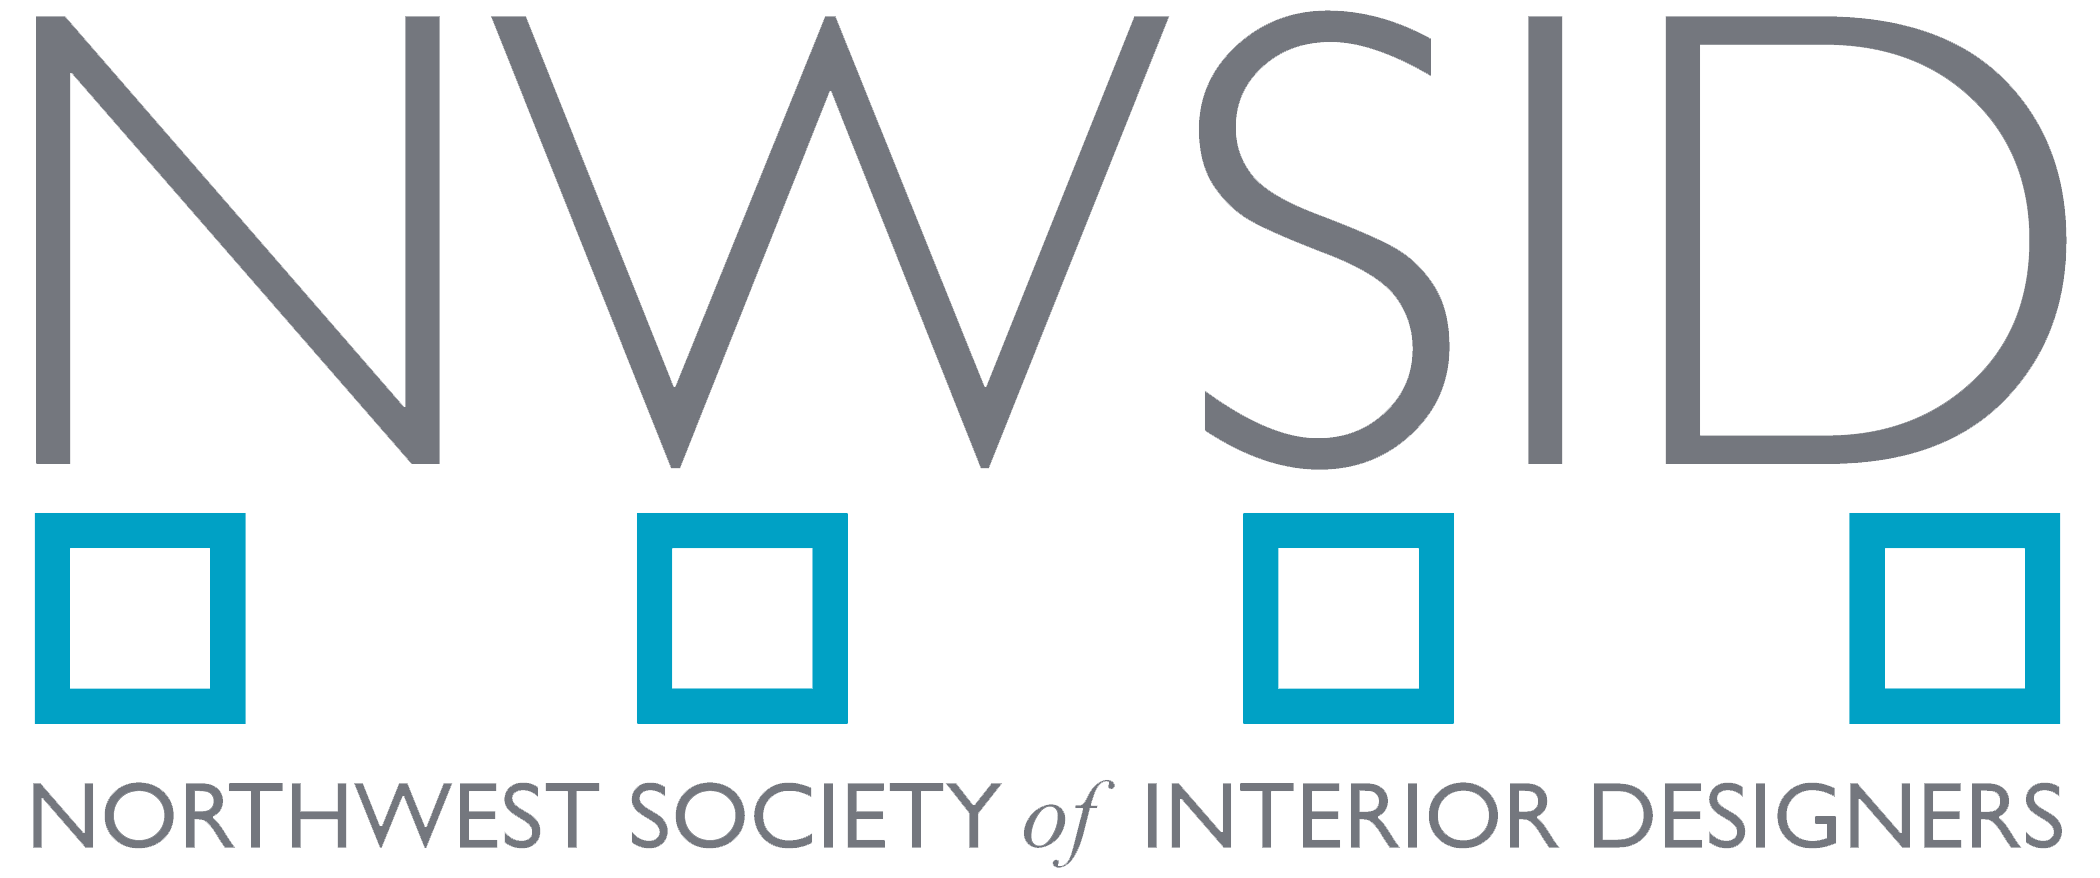 NWSID logo